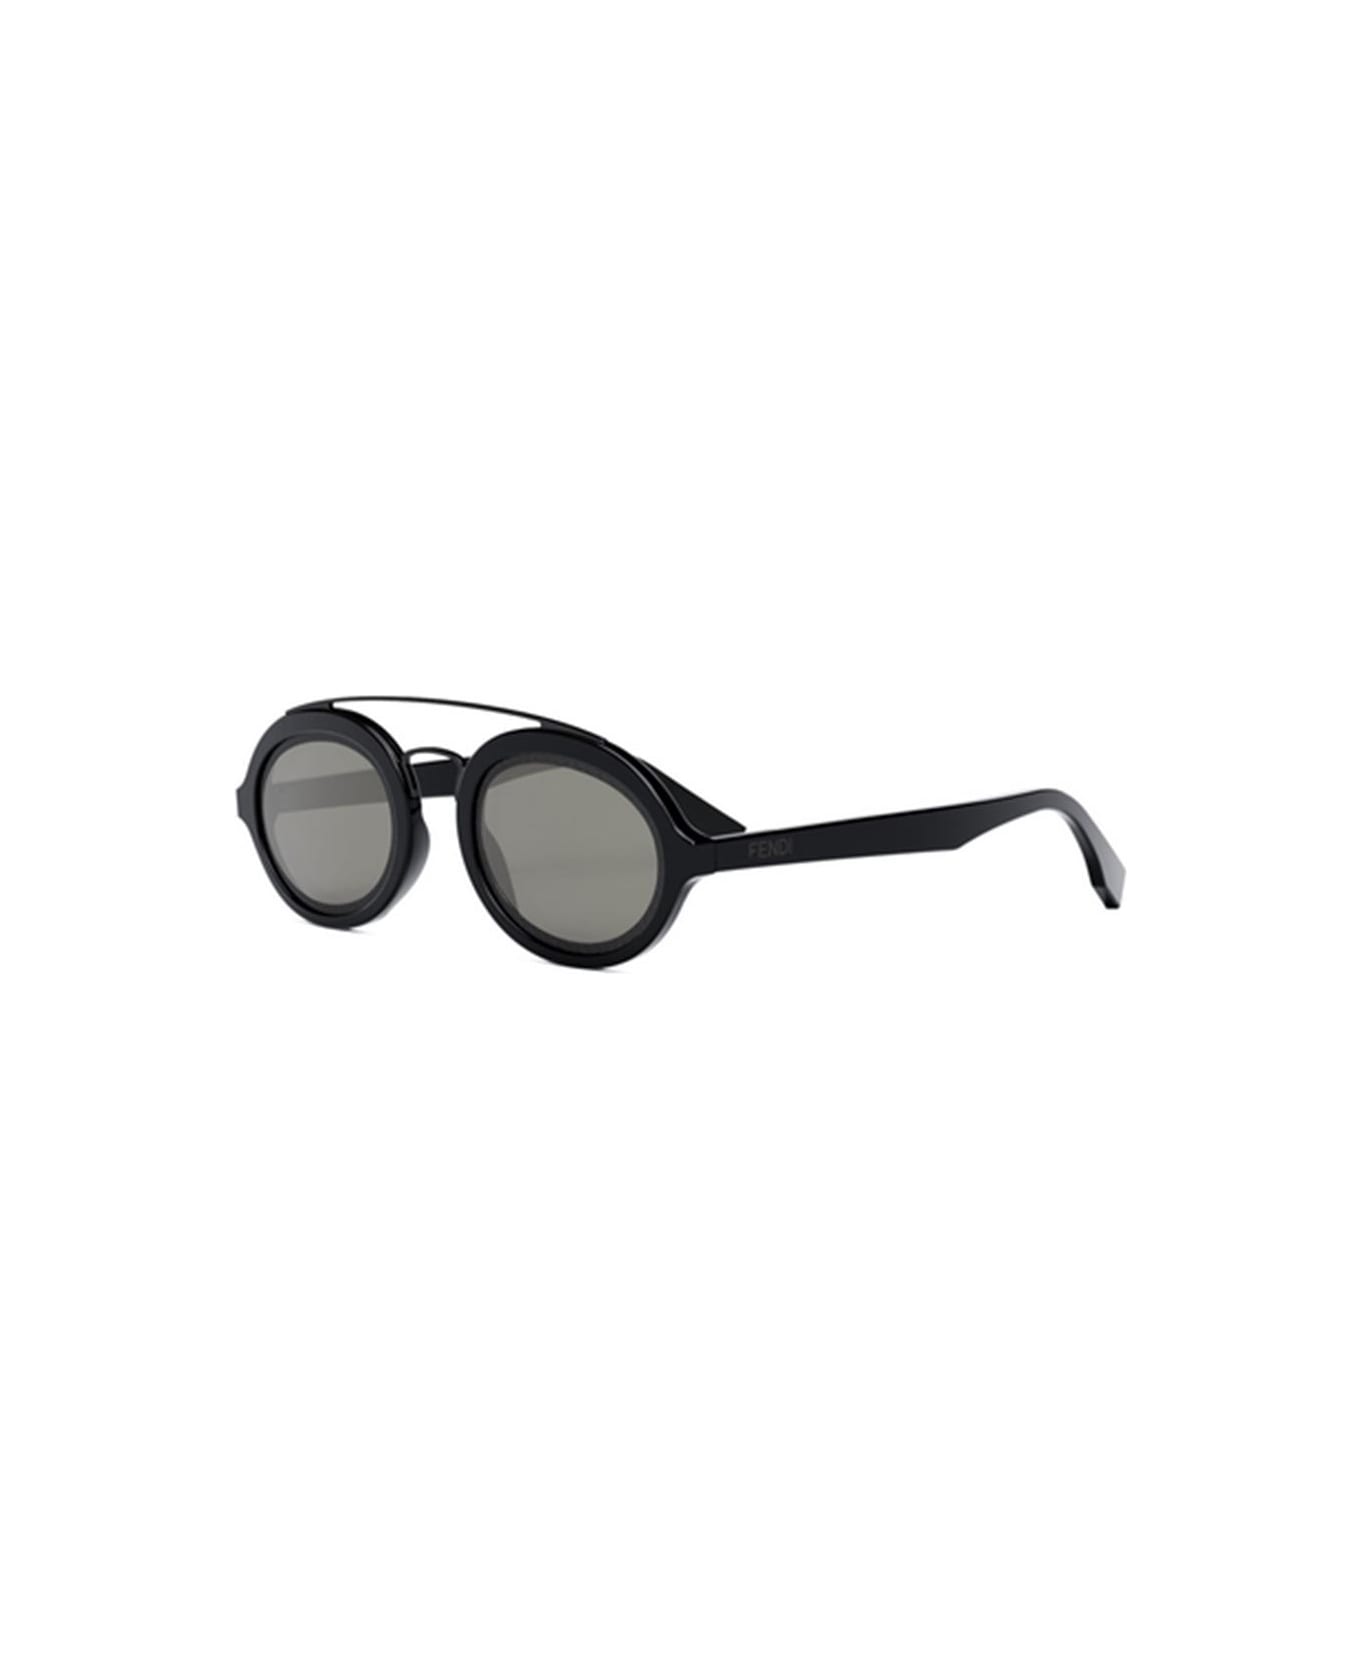 Fendi Eyewear Sunglasses - Nero/Grigio